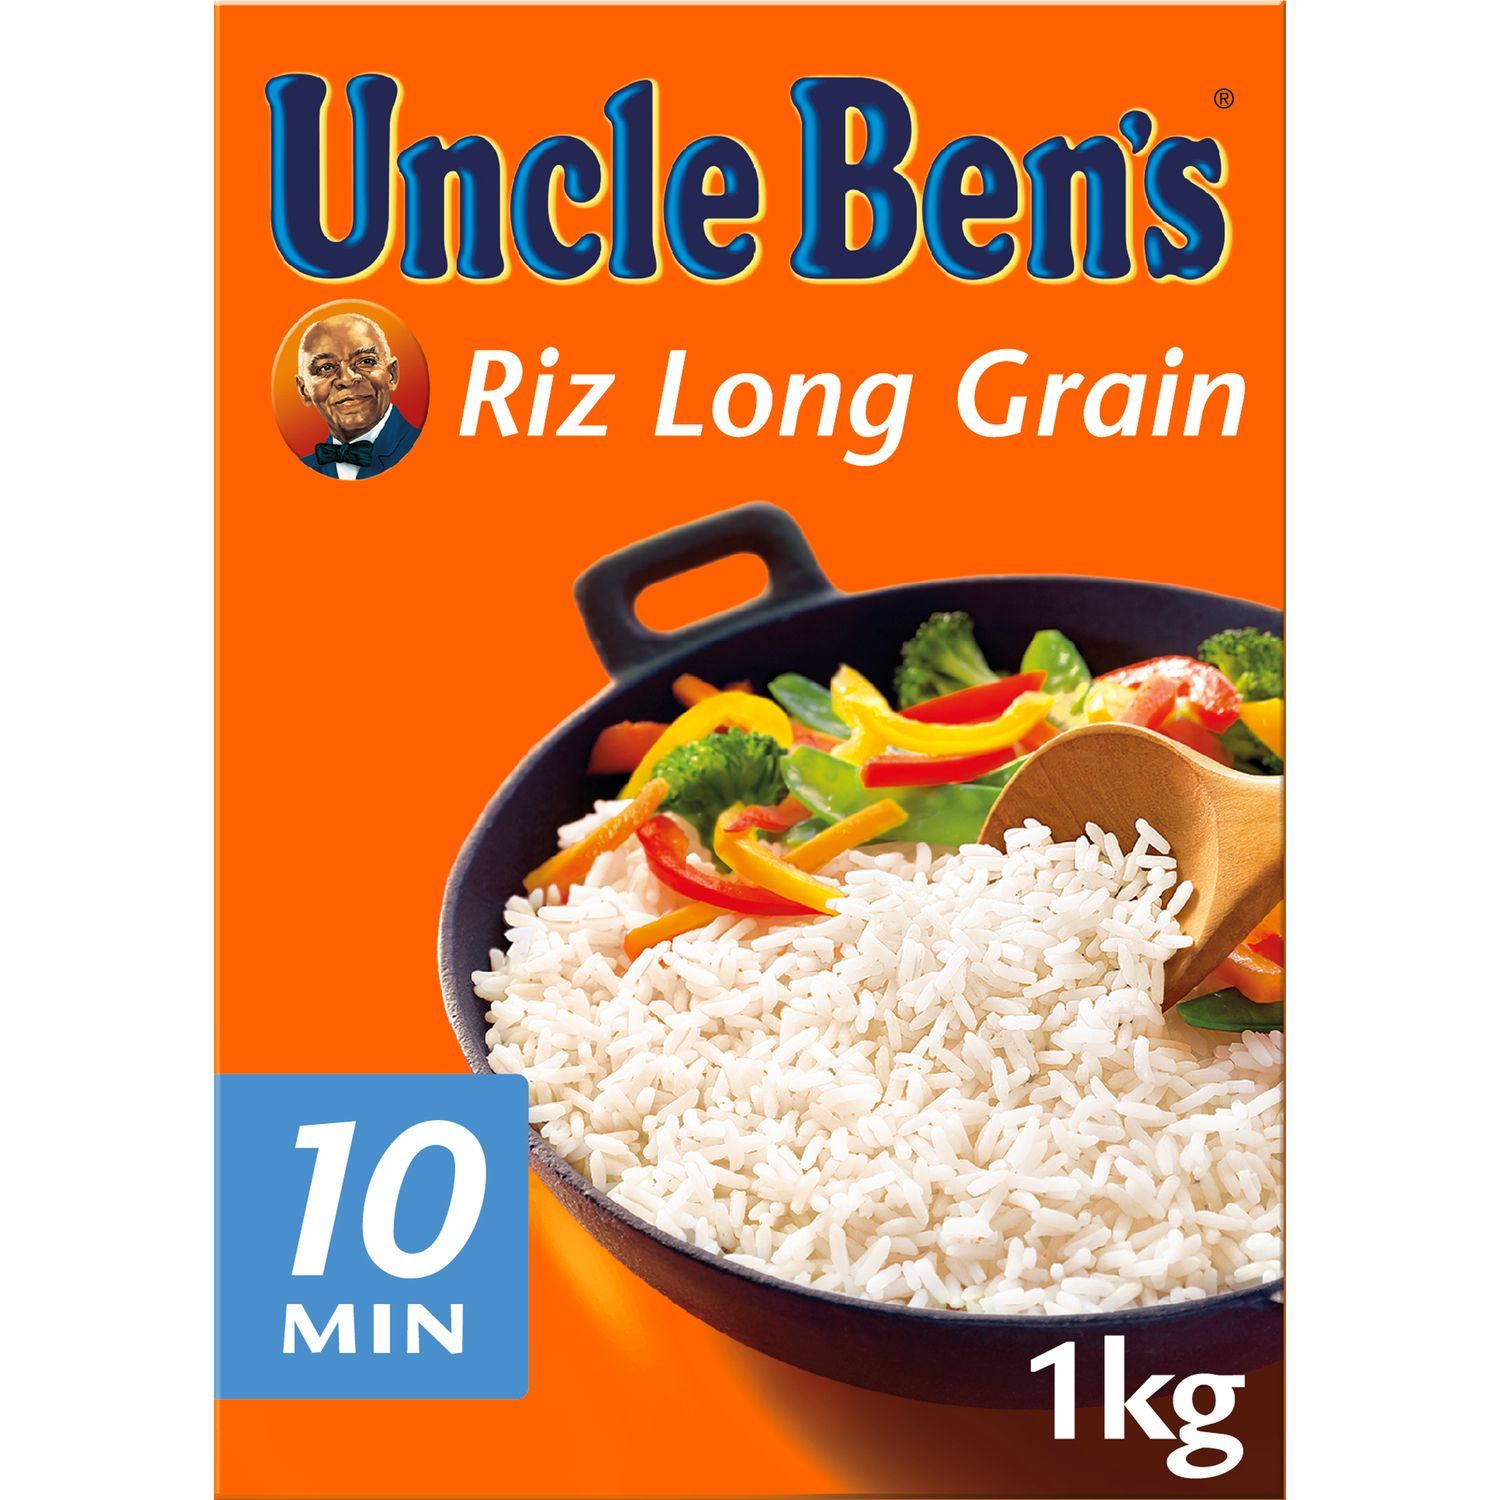 Ben s original riz vrac long grain 10mn 1kg